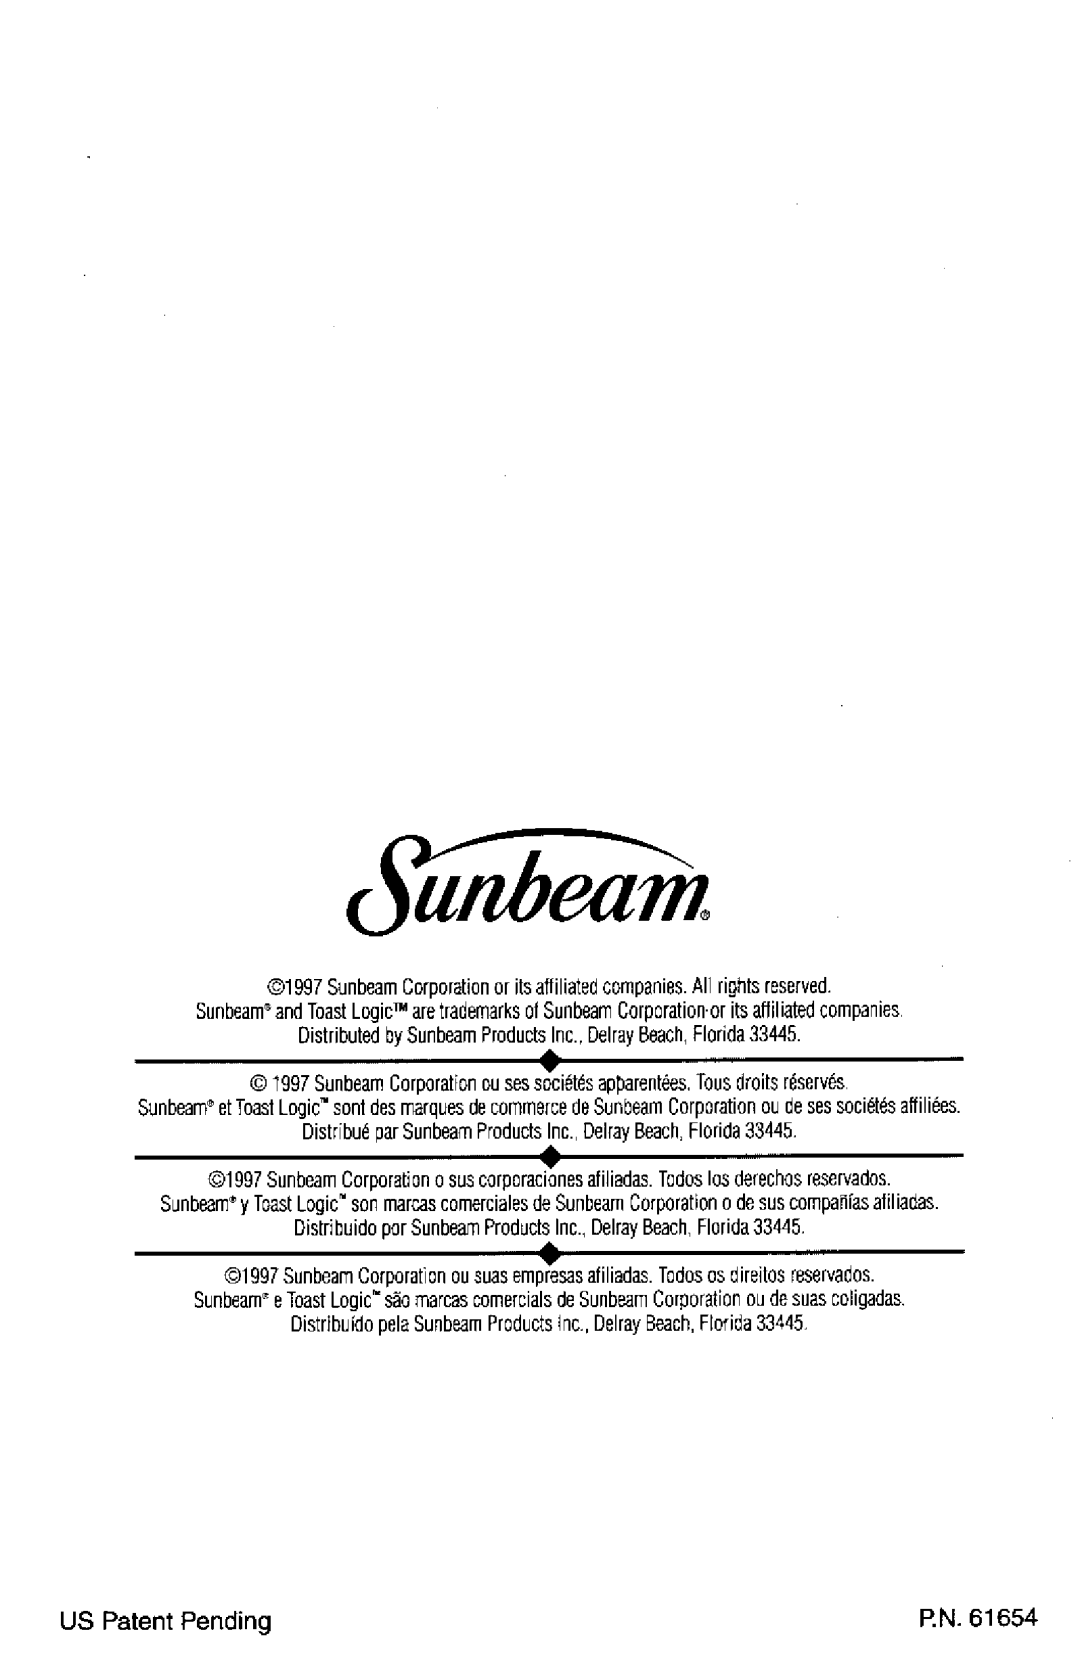 Sunbeam 6203, 6202 instruction manual US Patent Pending, Distribuido pela Sunbeam Products, P.N 